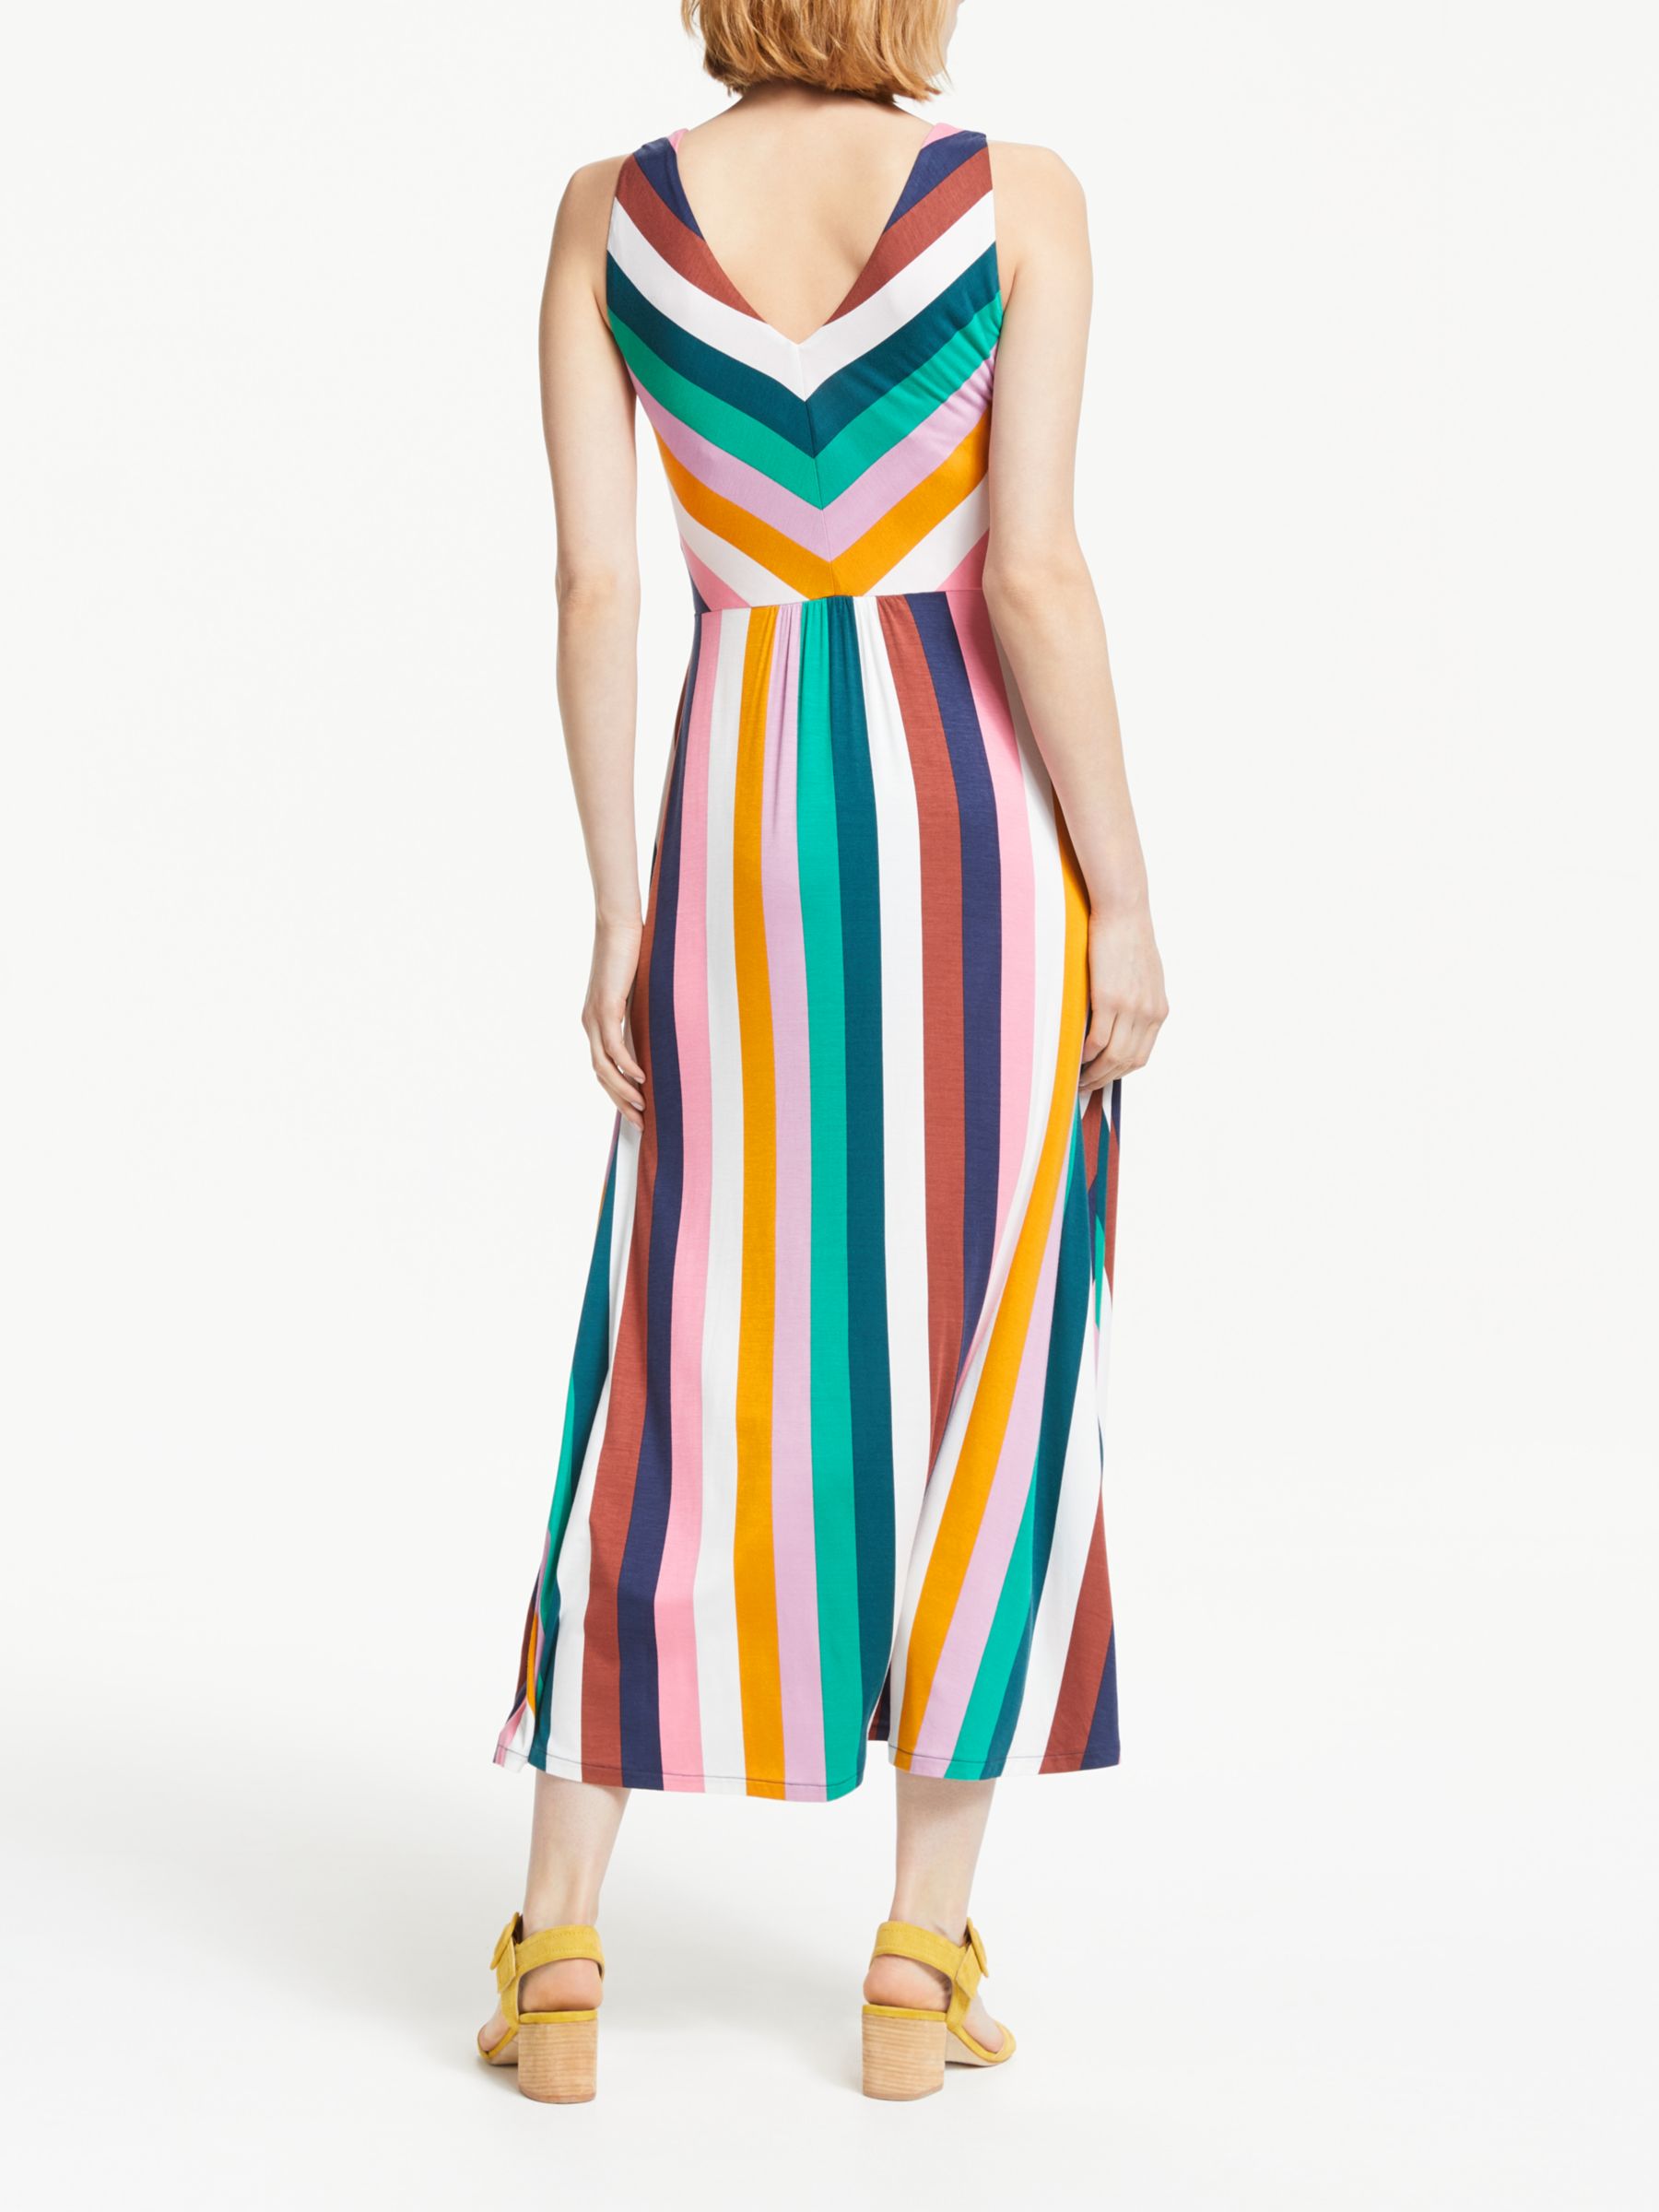 Boden Octavia Jersey Midi Dress, Multi, 8